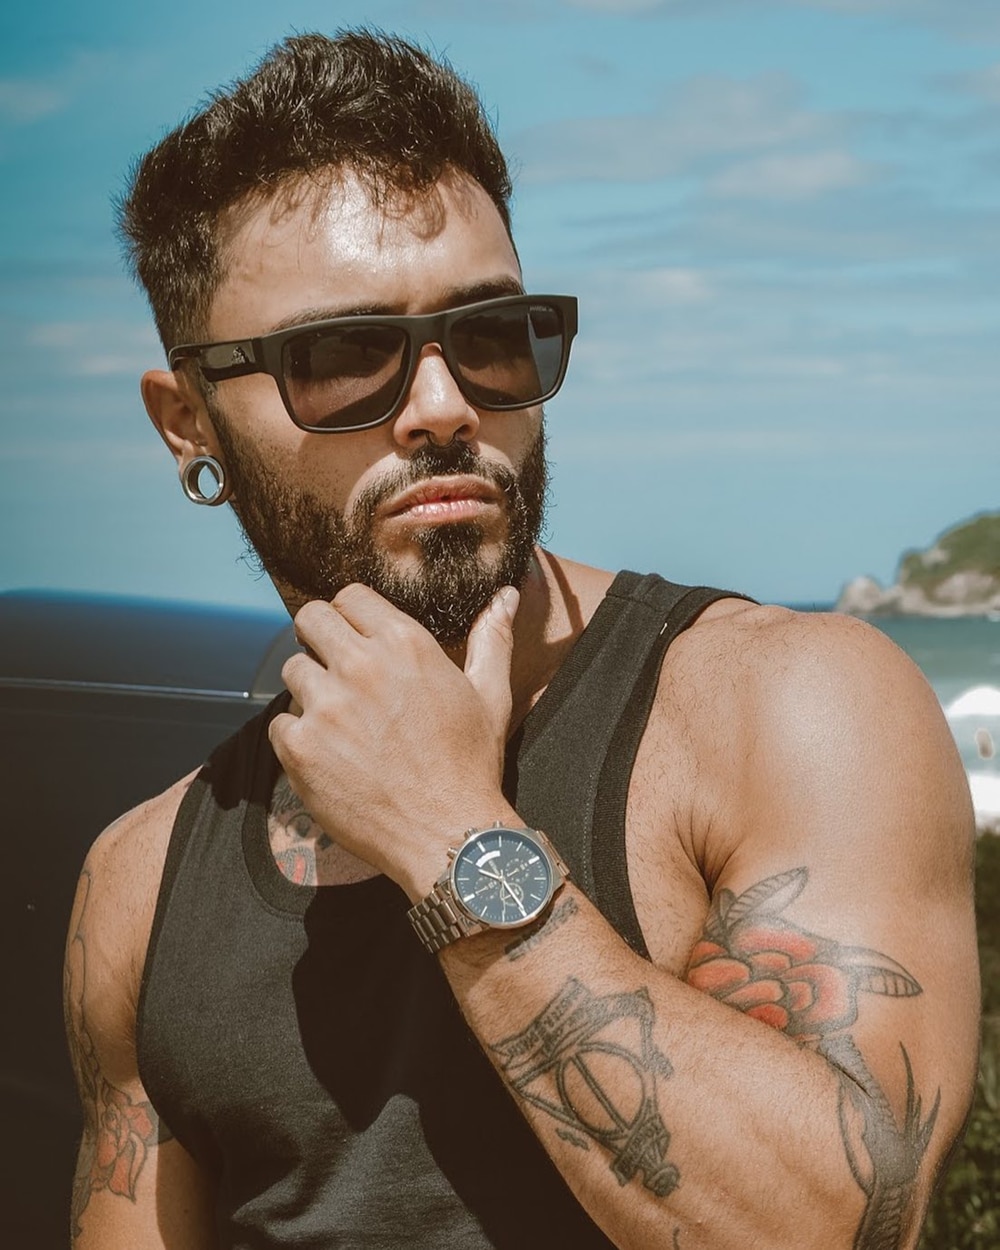 NIBOSI Relogio Masculino Mens Watches Top Brand Luxury Famous Men's Watch Fashion Casual Chronograph Military Quartz Wristwatch